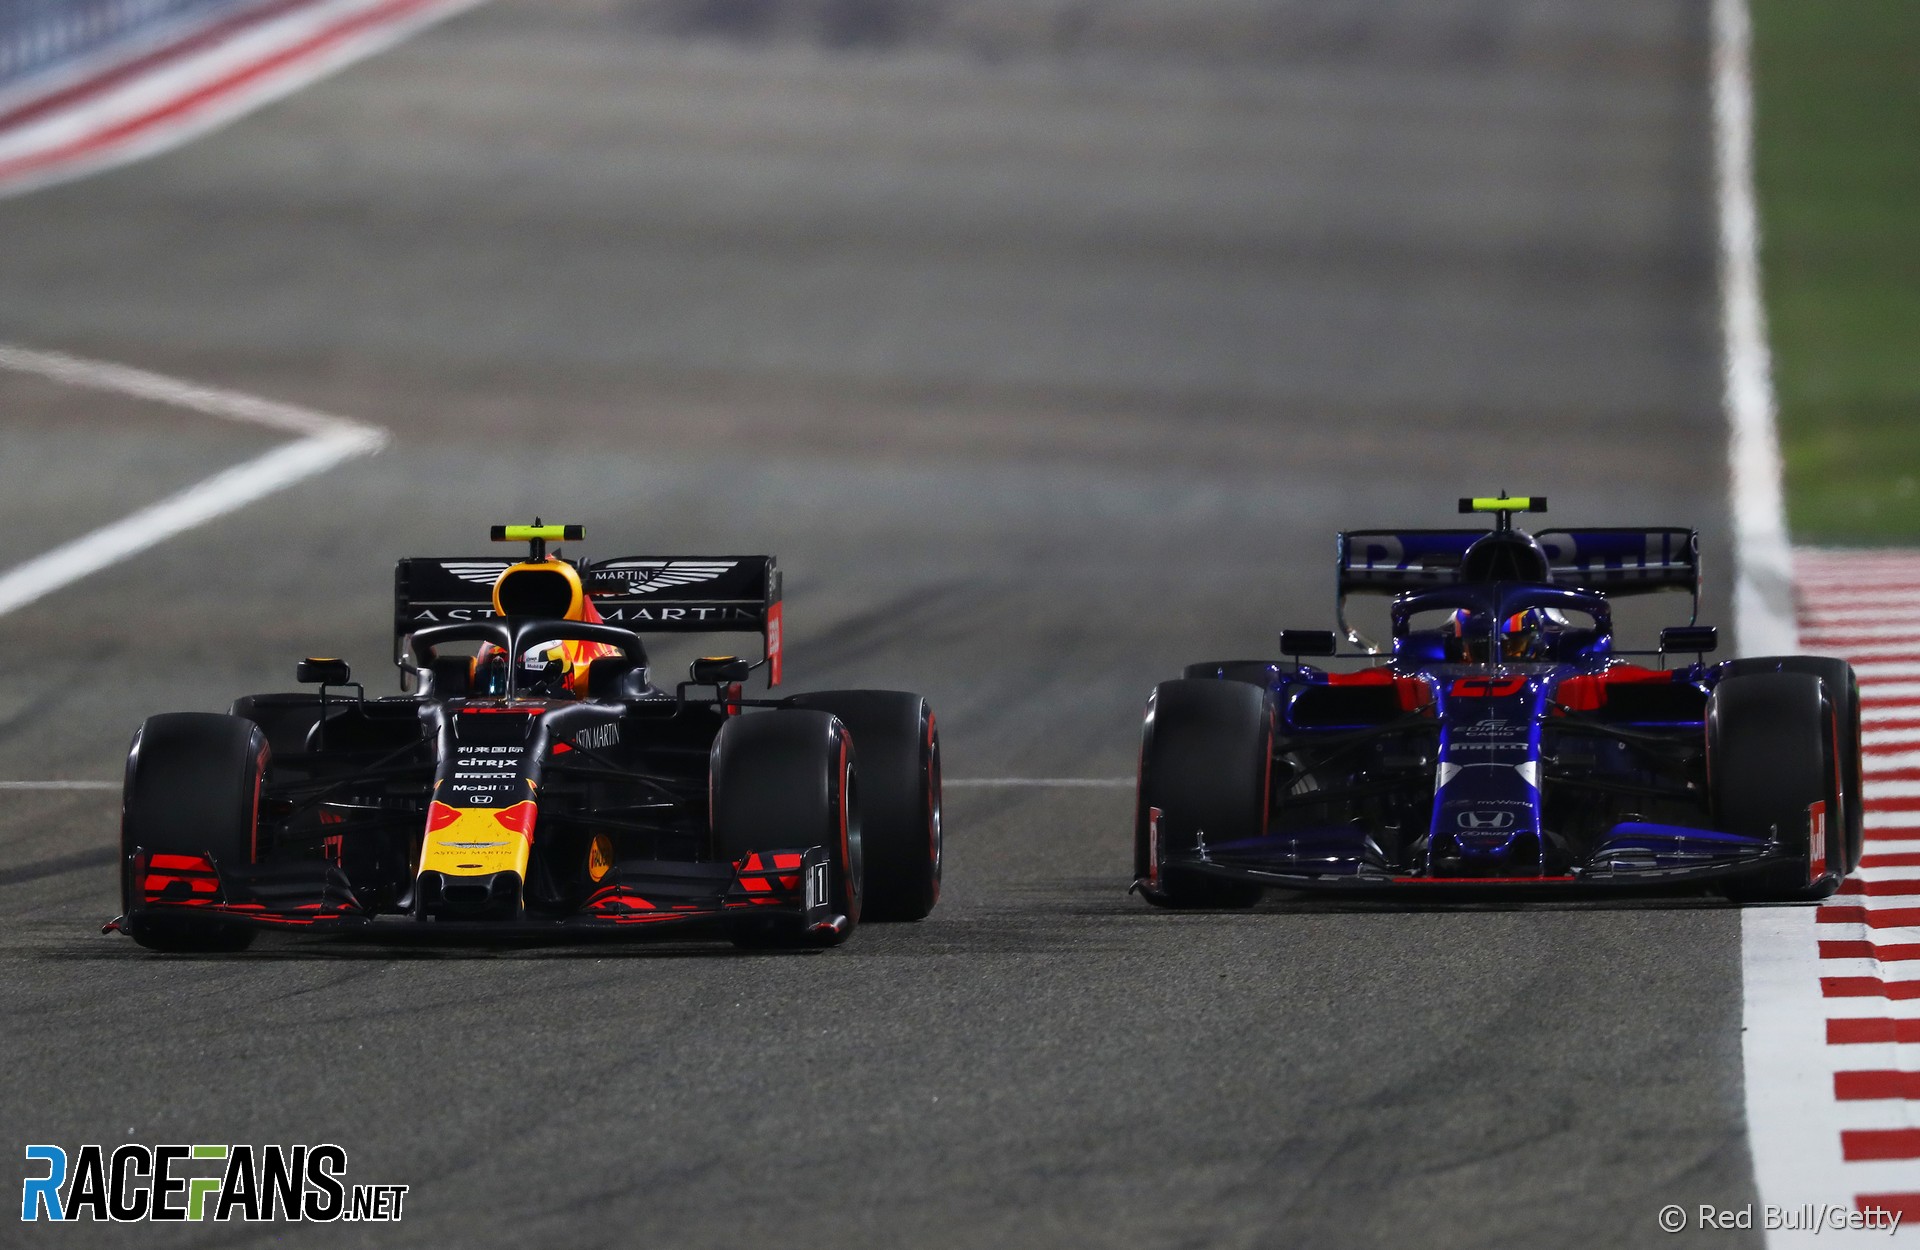 Pierre Gasly, Alexander Albon, Bahrain International Circuit, 2019